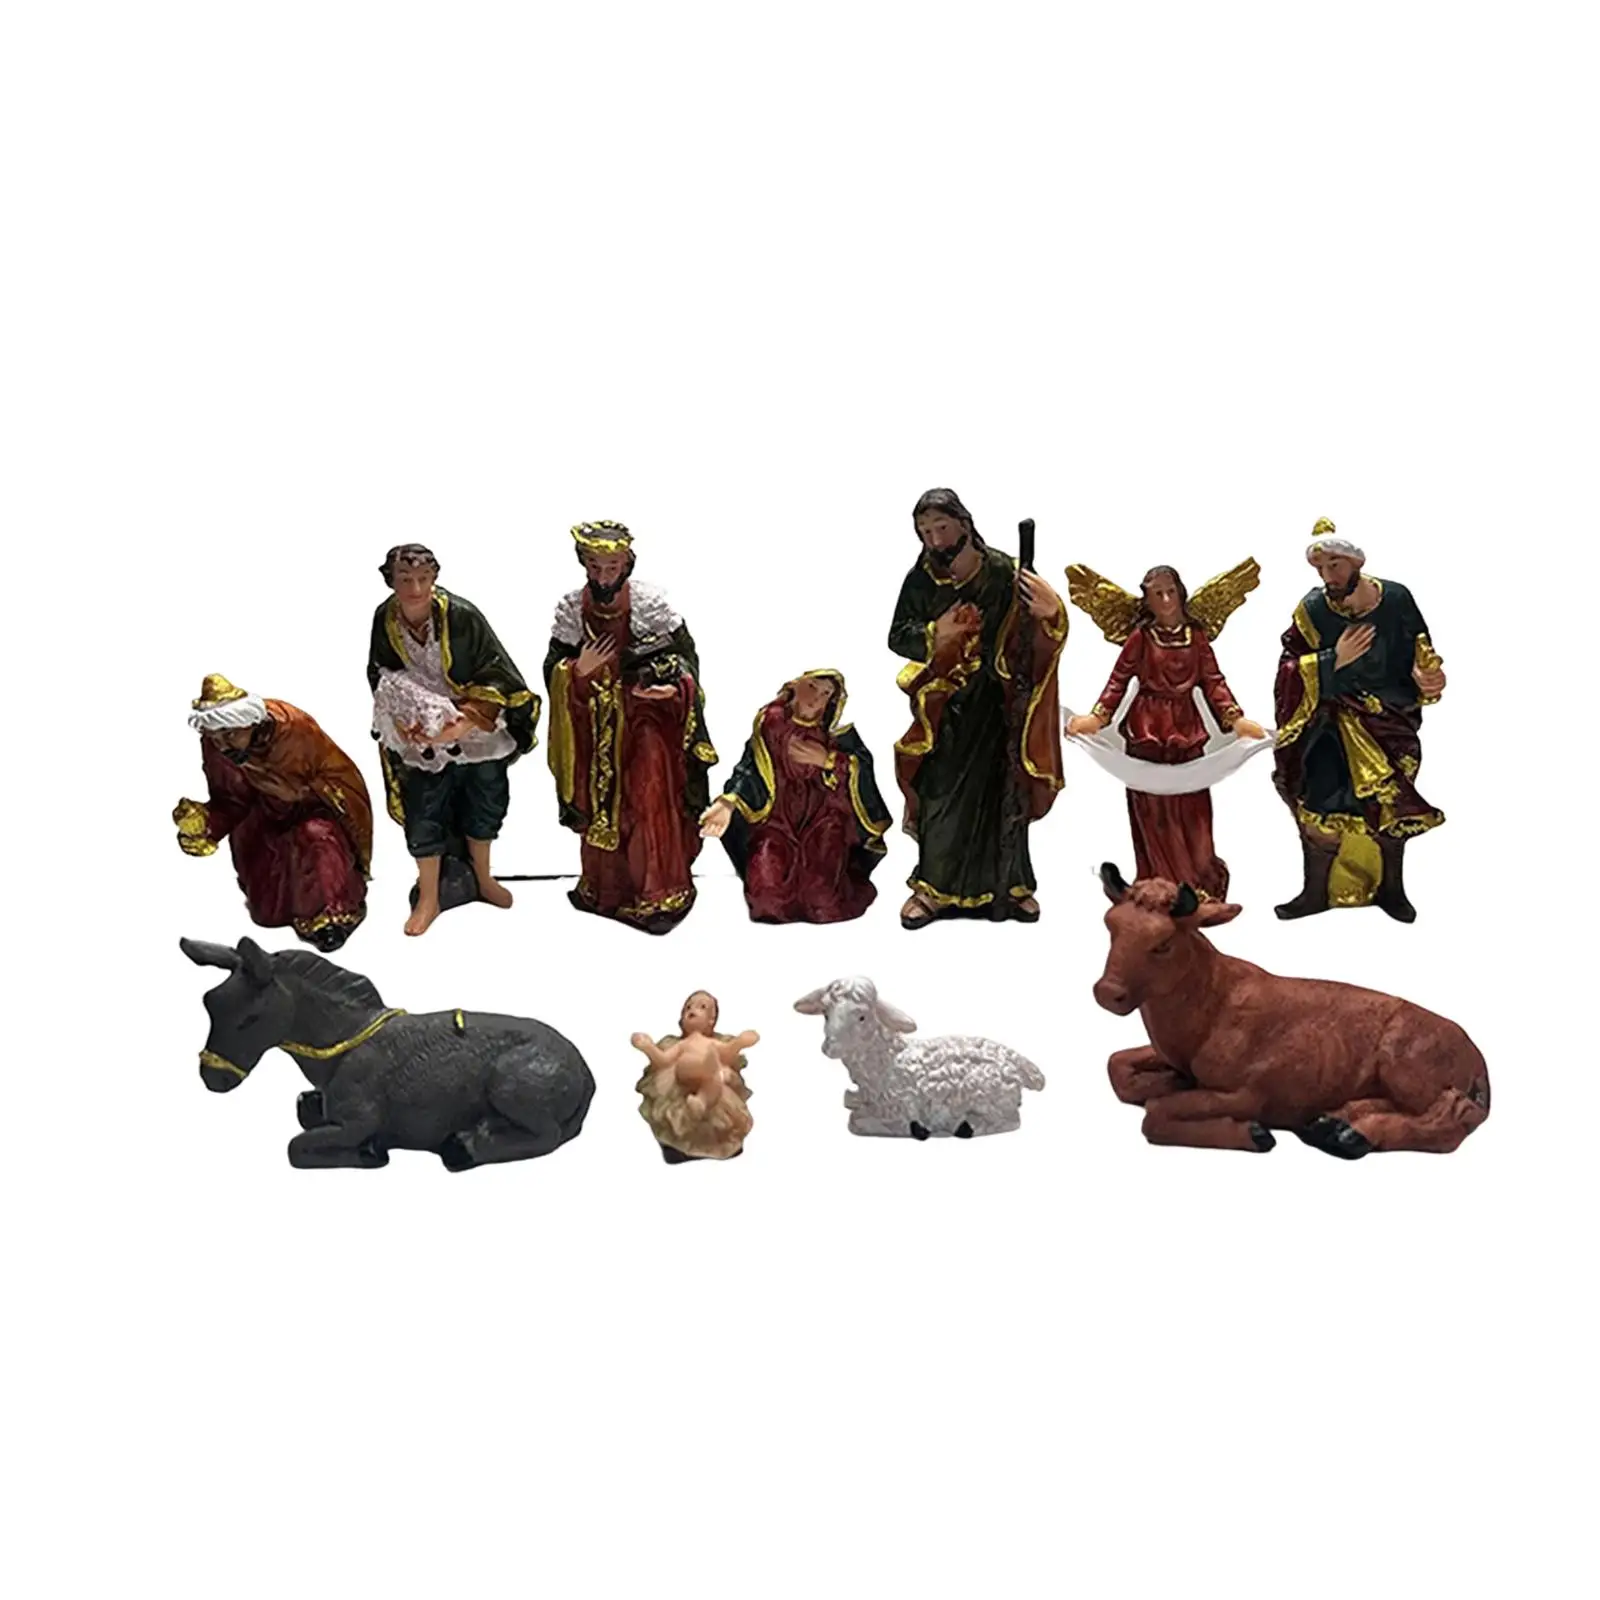 11Pcs Nativity Scene Figures Religious Ornament Statue for Desktop Collection Home